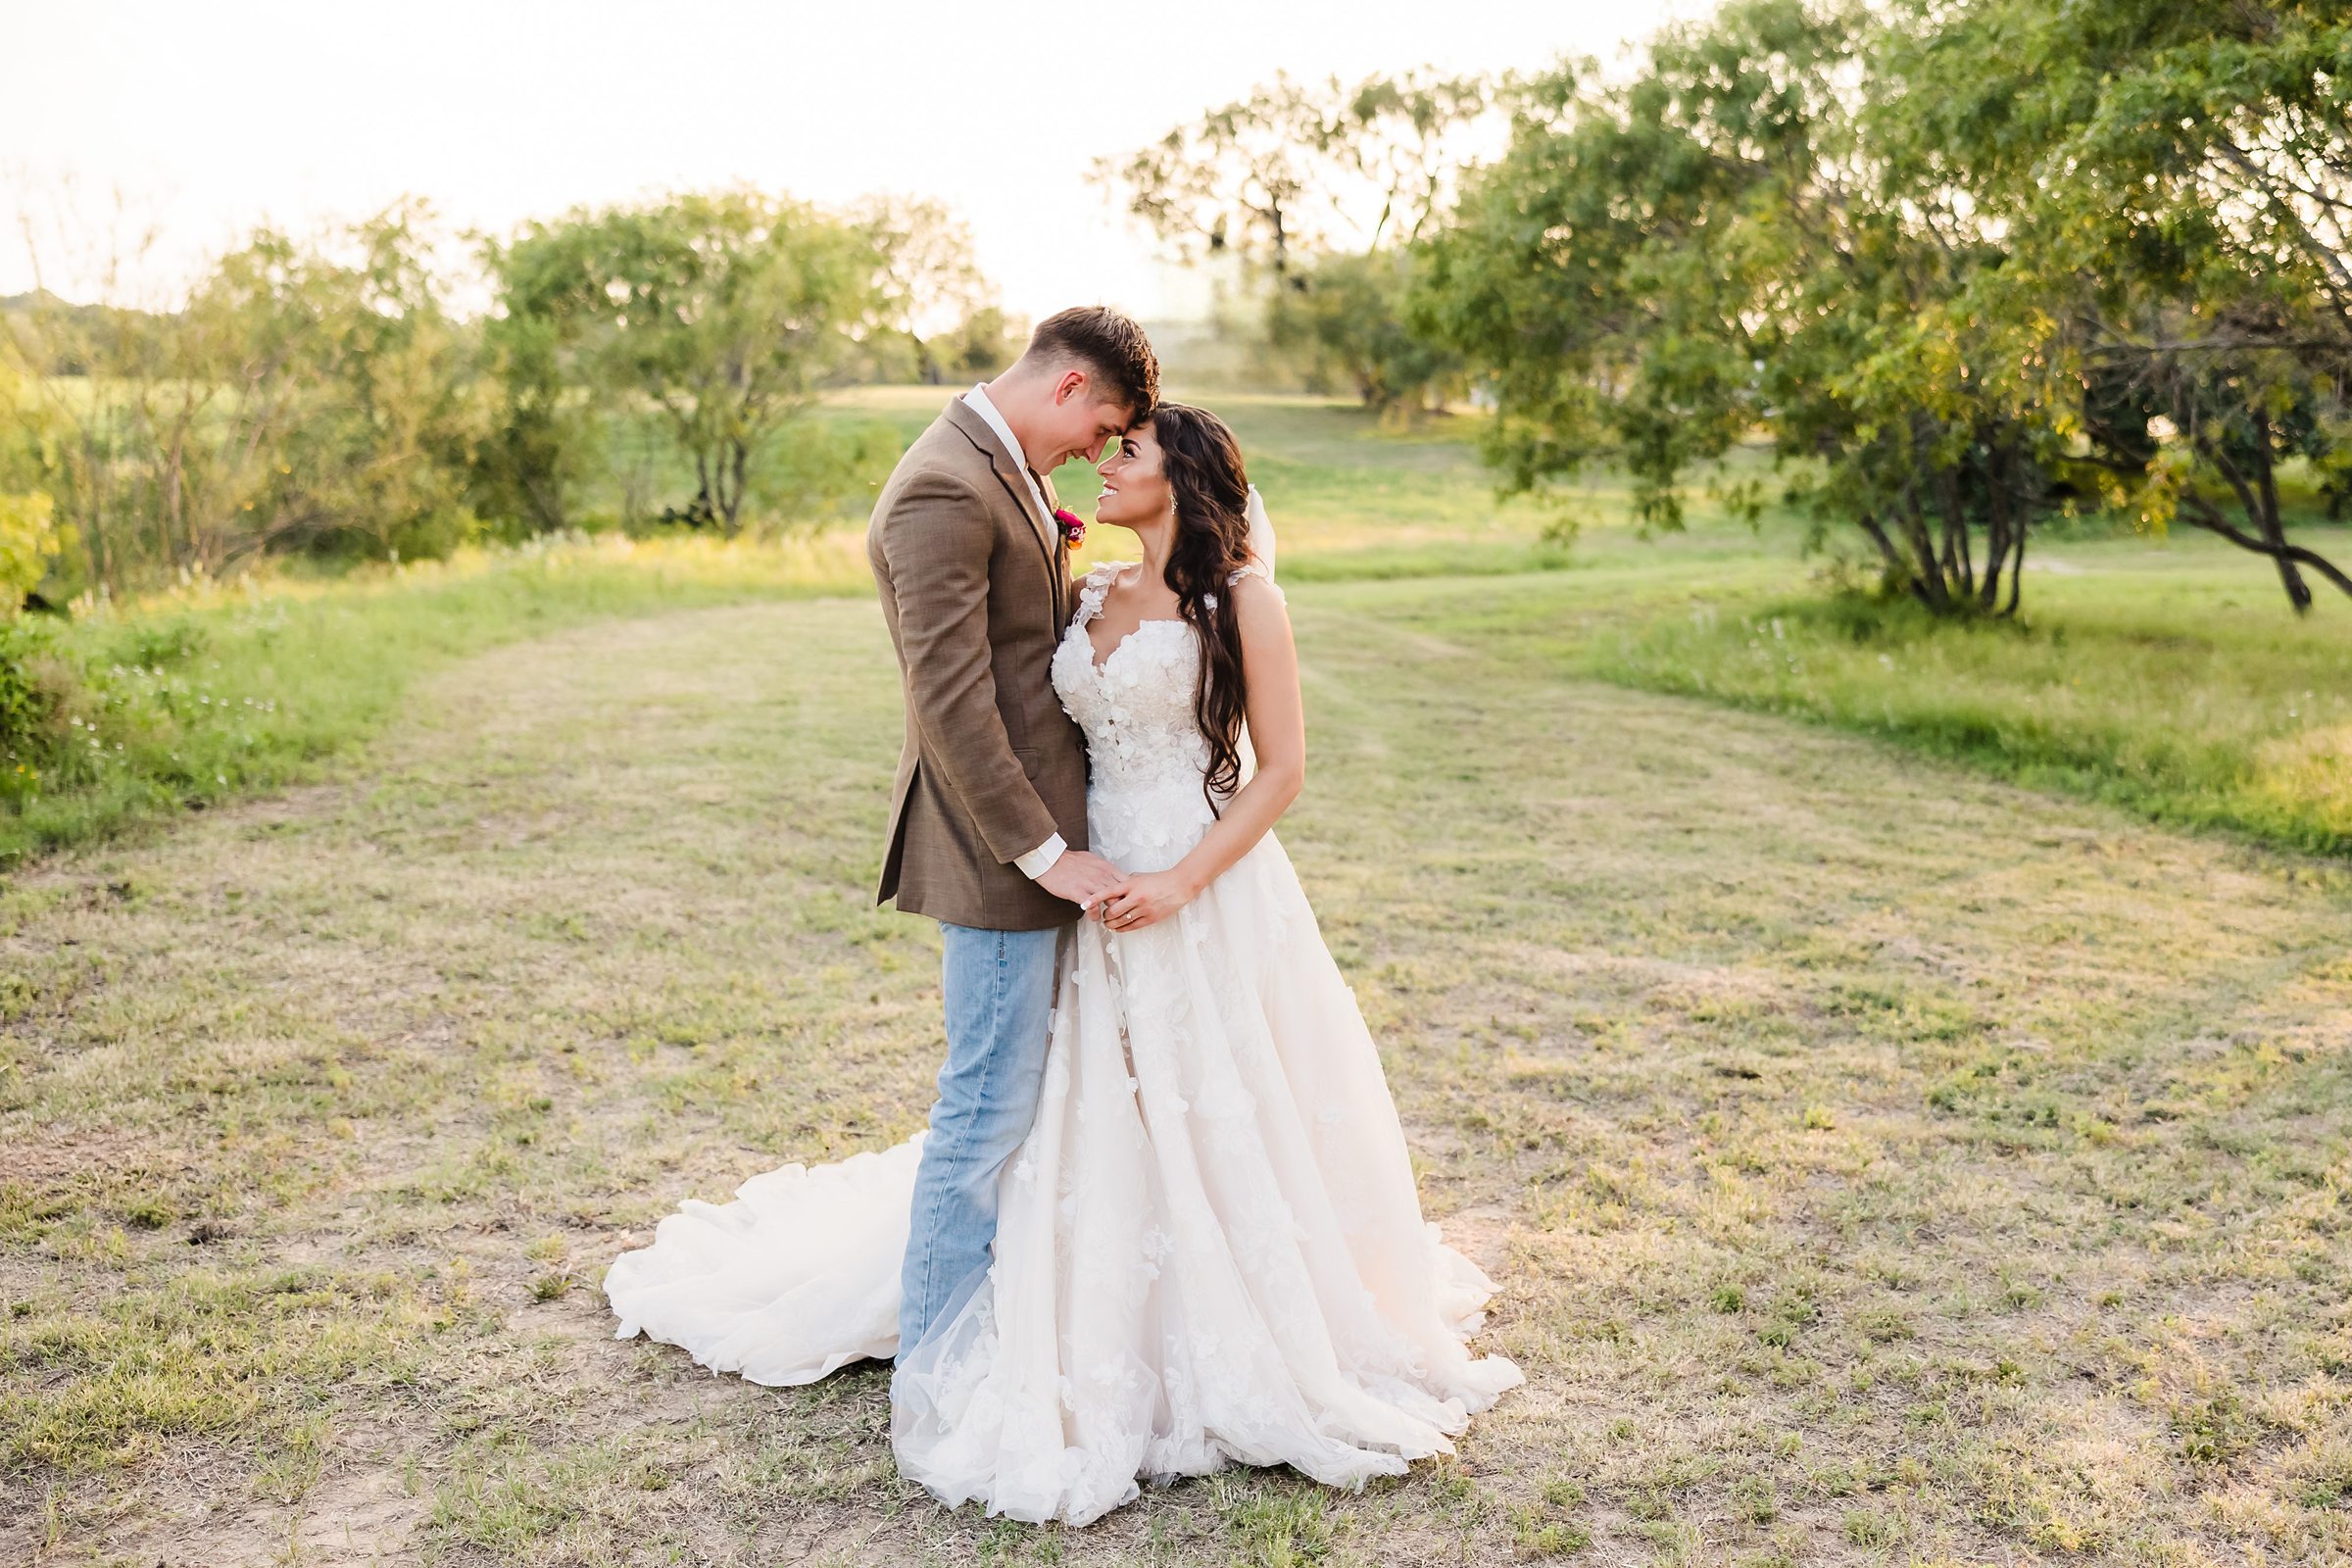 Bride and Groom celebrate their wedding at the Grandview venue in La Vernia, Texas.